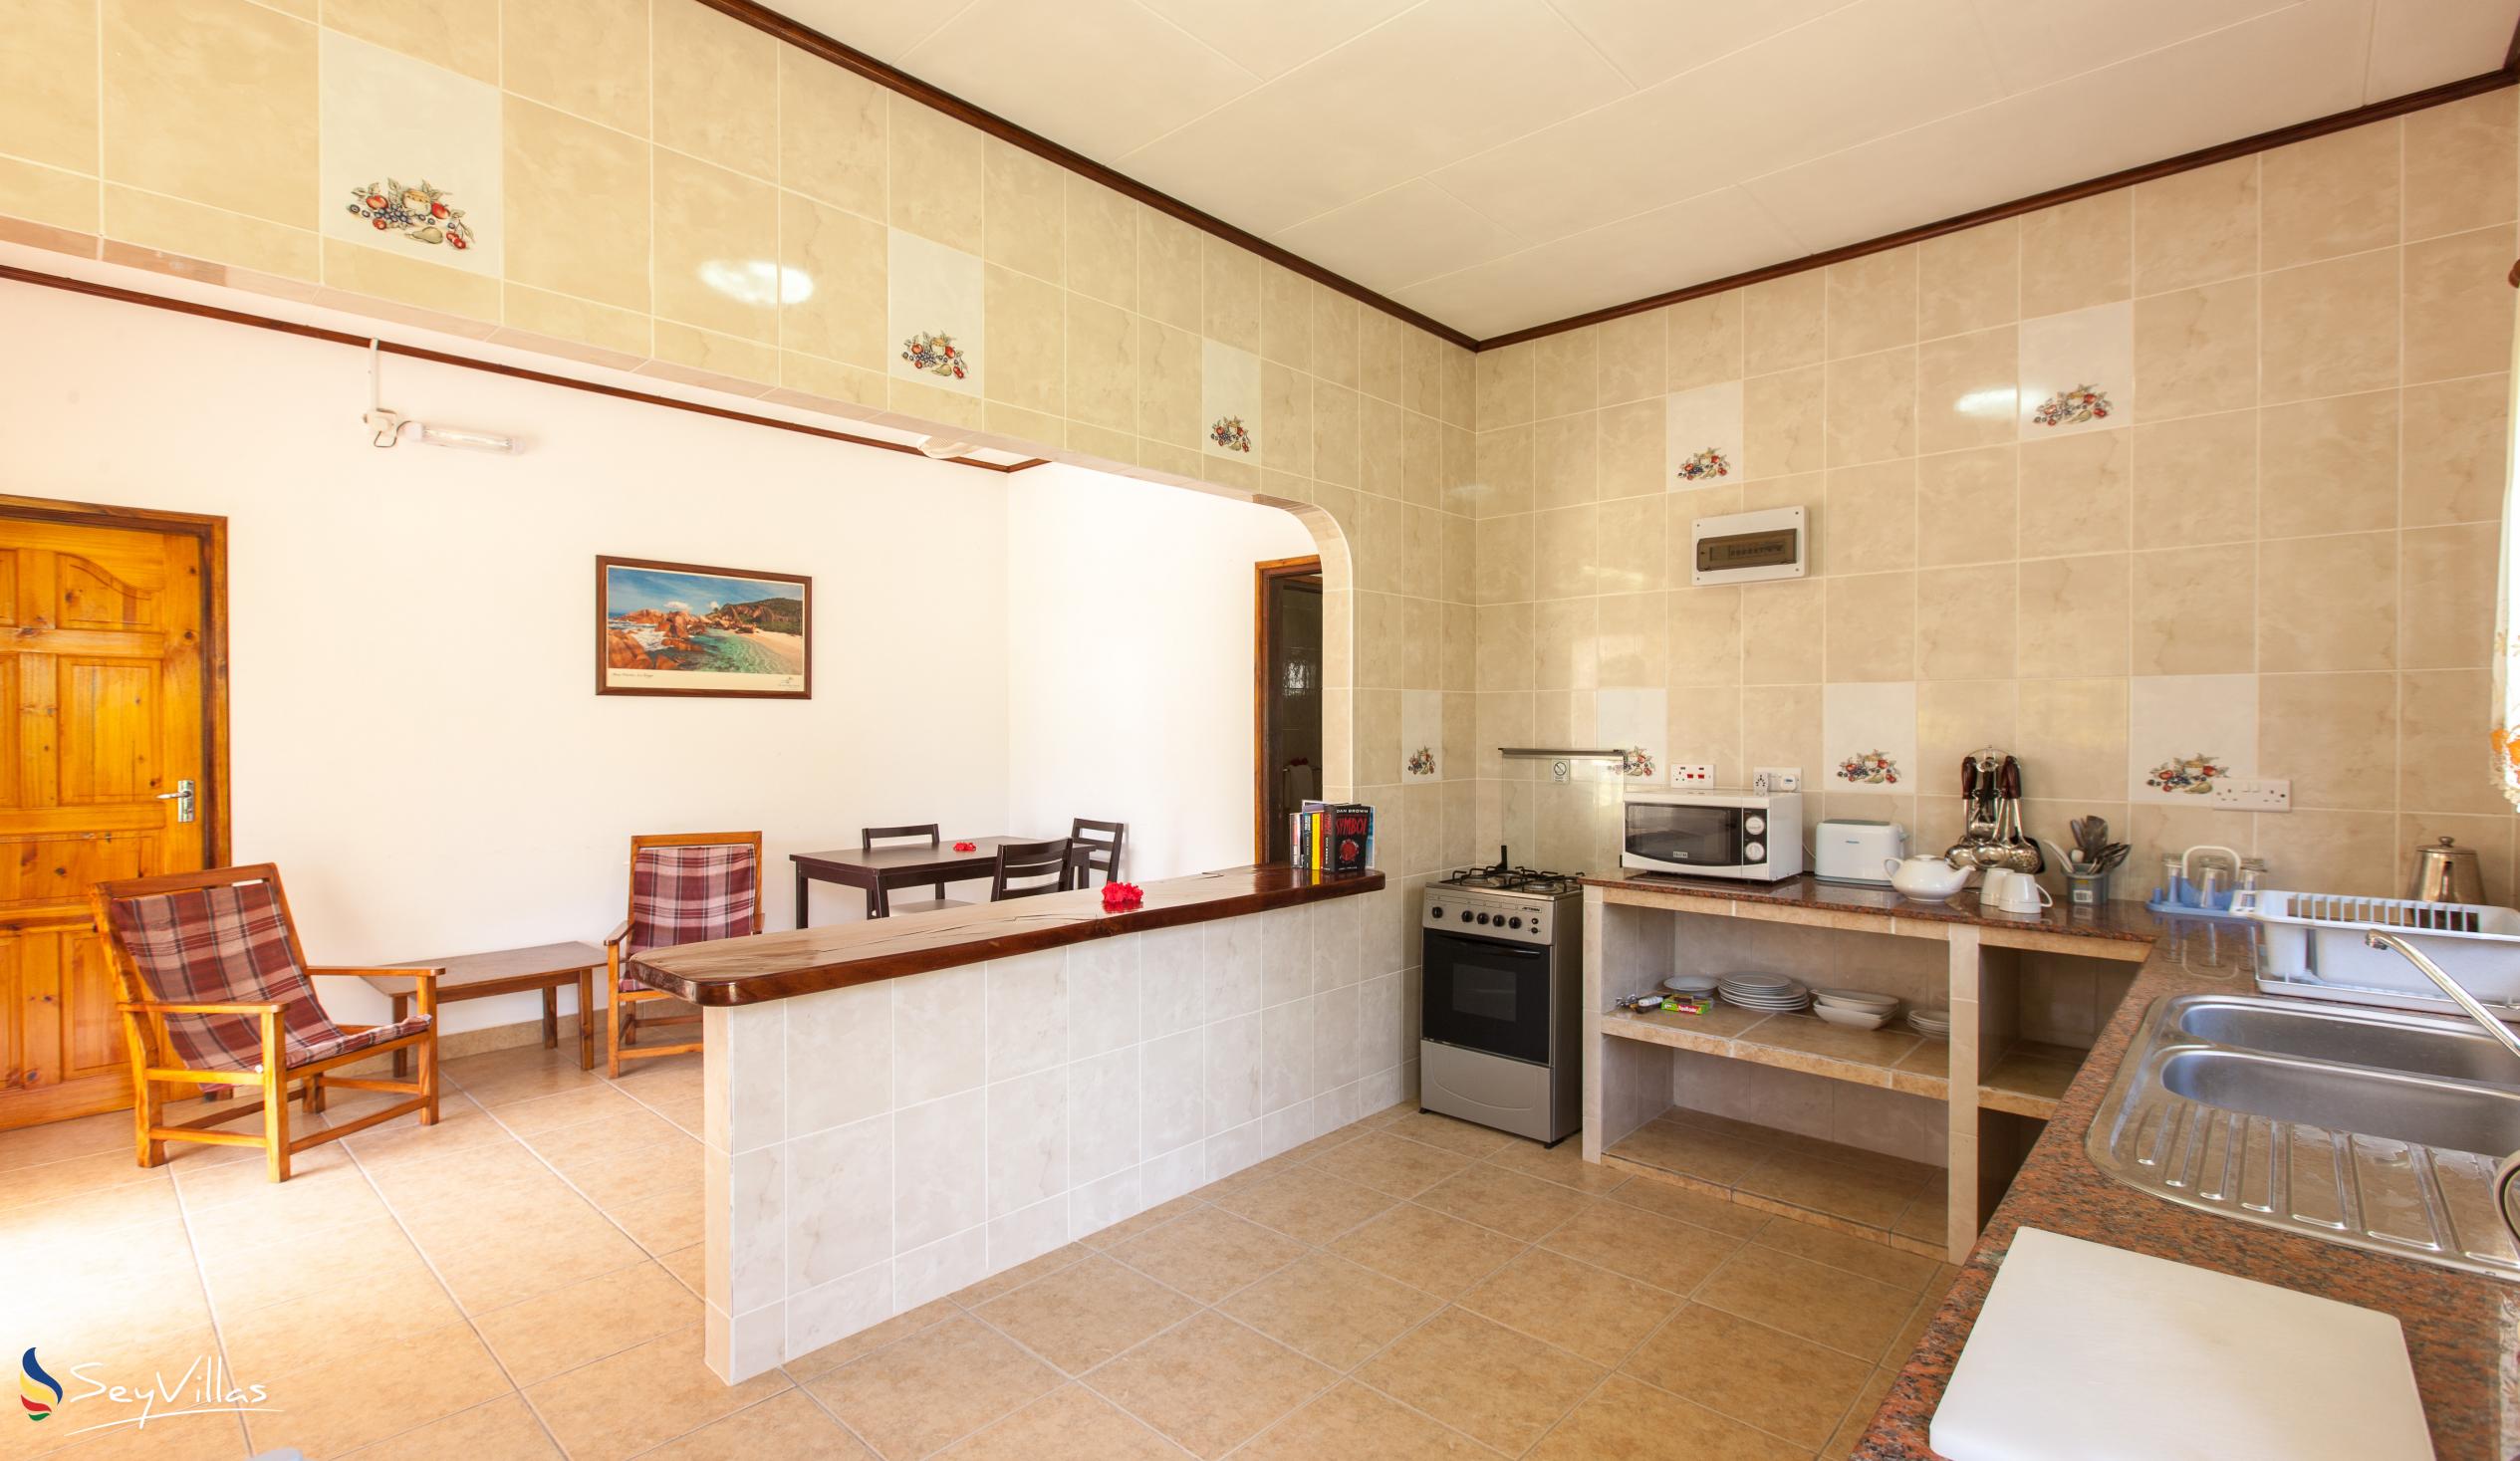 Foto 18: Zerof Self Catering  Apartments - Appartement à 1 chambre - La Digue (Seychelles)